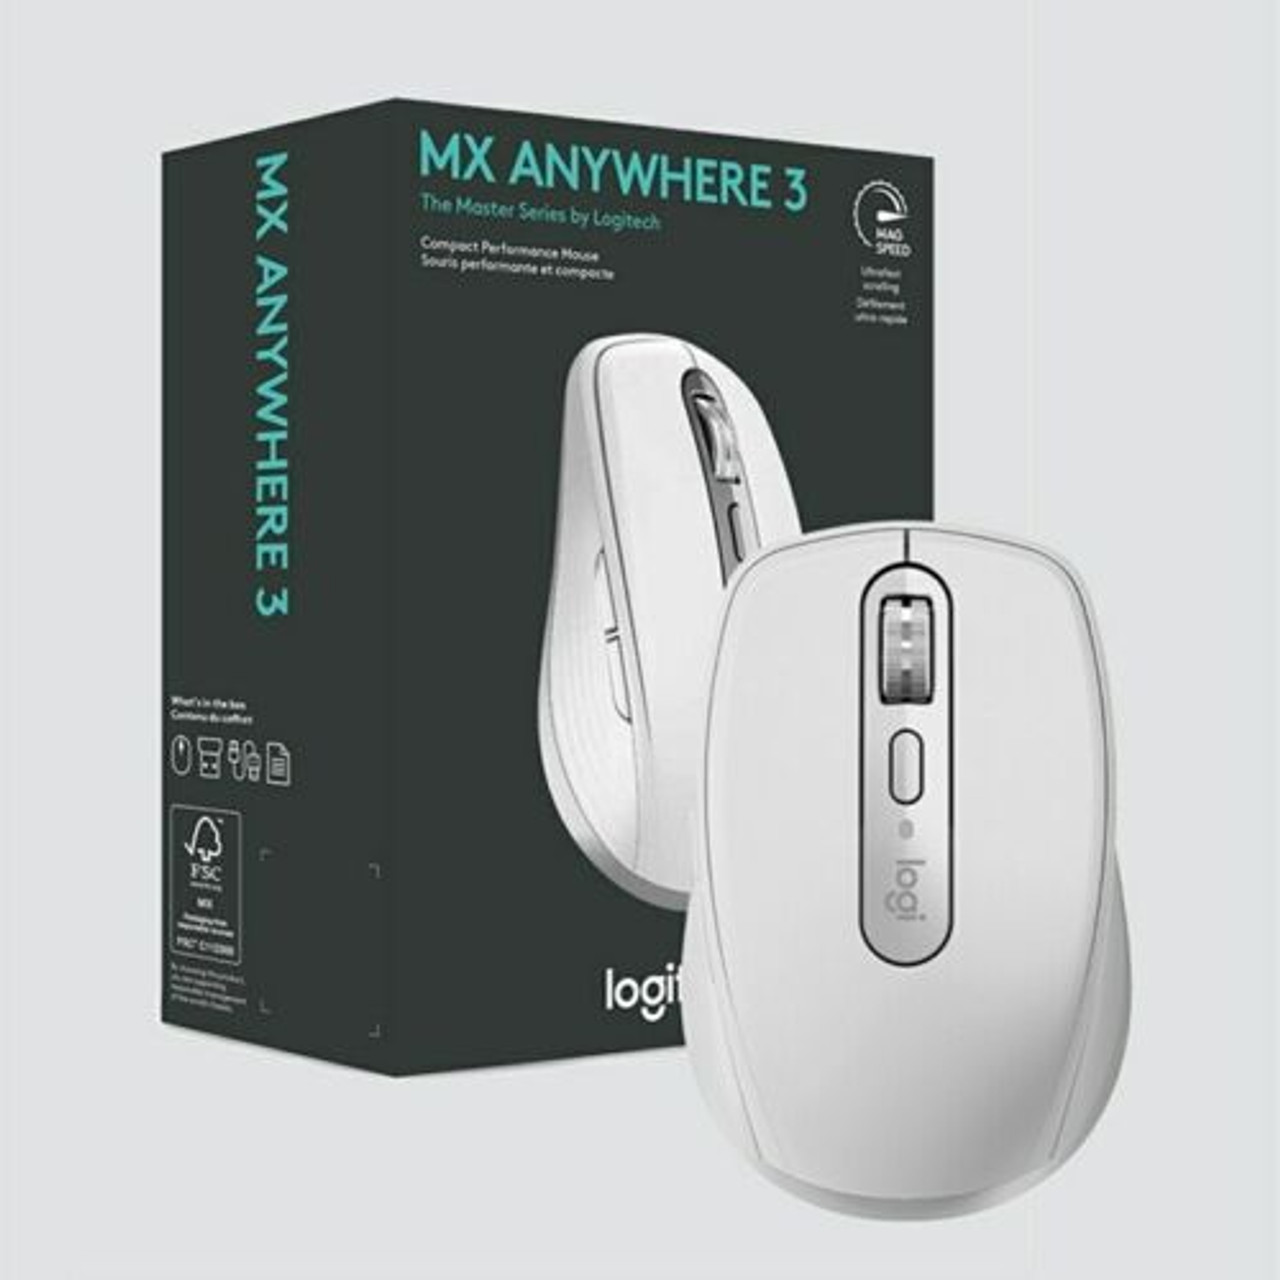 Logitech MX Anywhere 3 for Mac - Souris PC - Garantie 3 ans LDLC